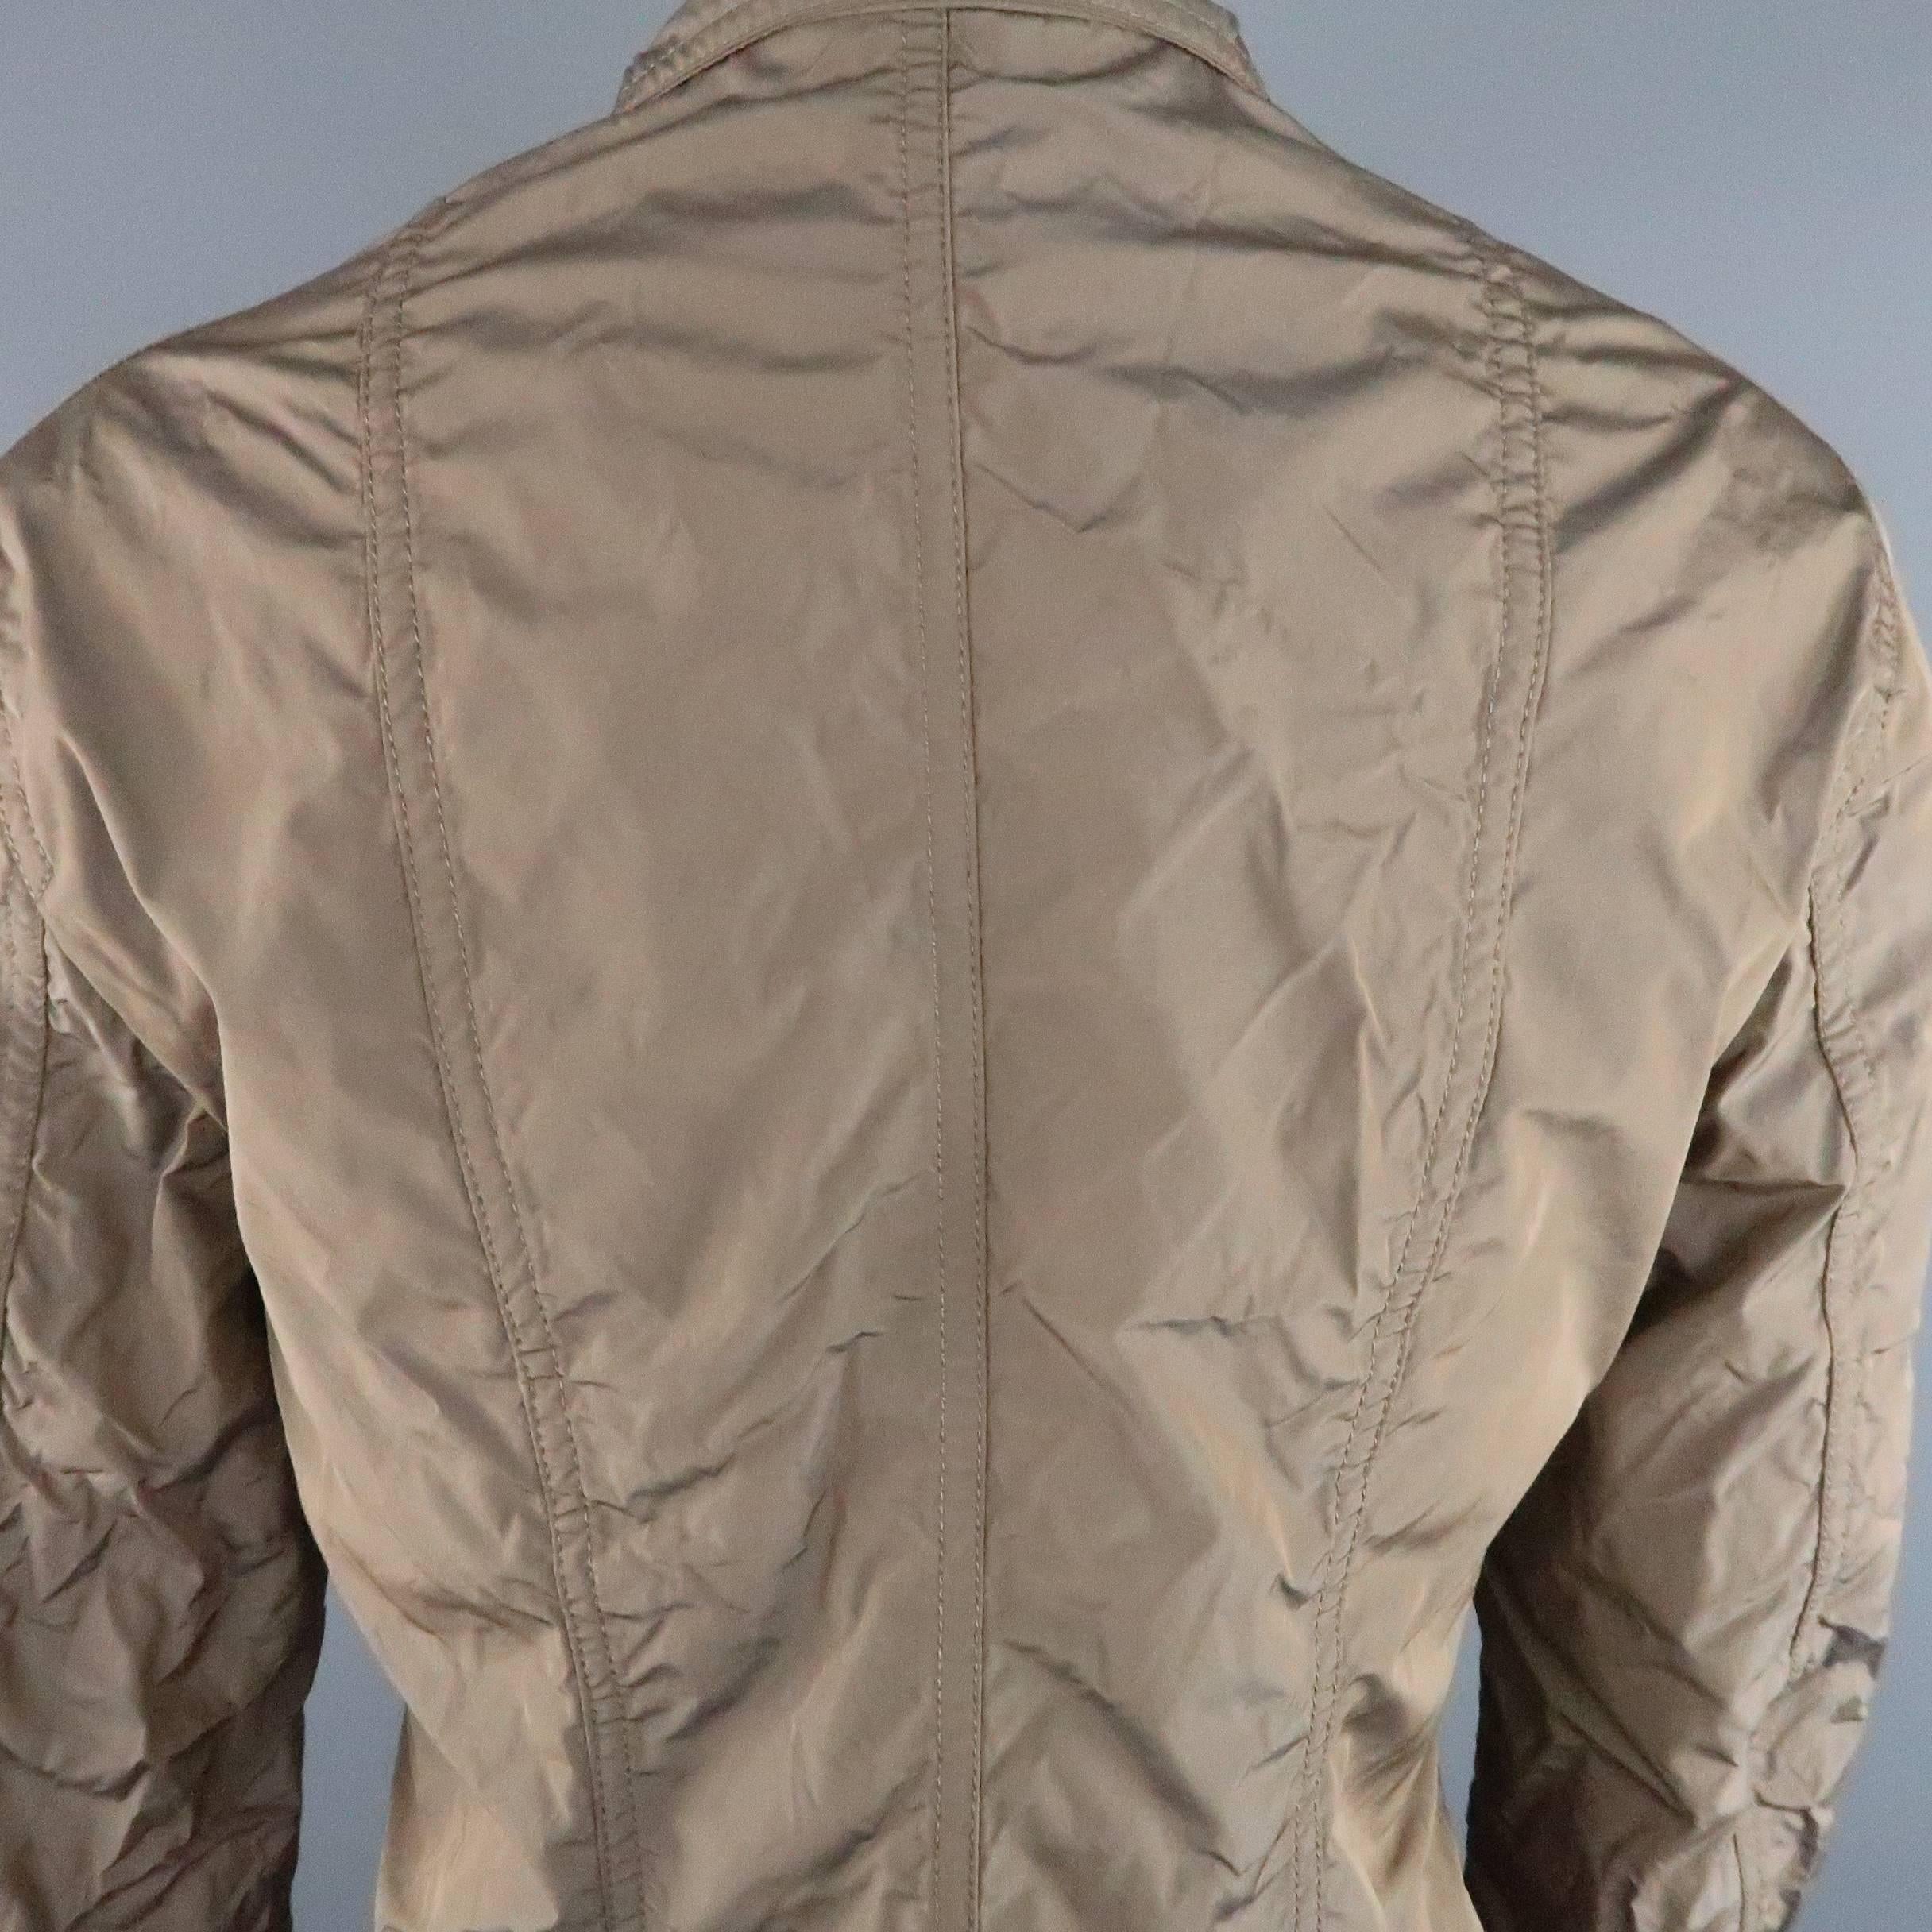 Brown JIL SANDER Size 4 Taupe Iridescent Wrinkled Taffeta Jacket